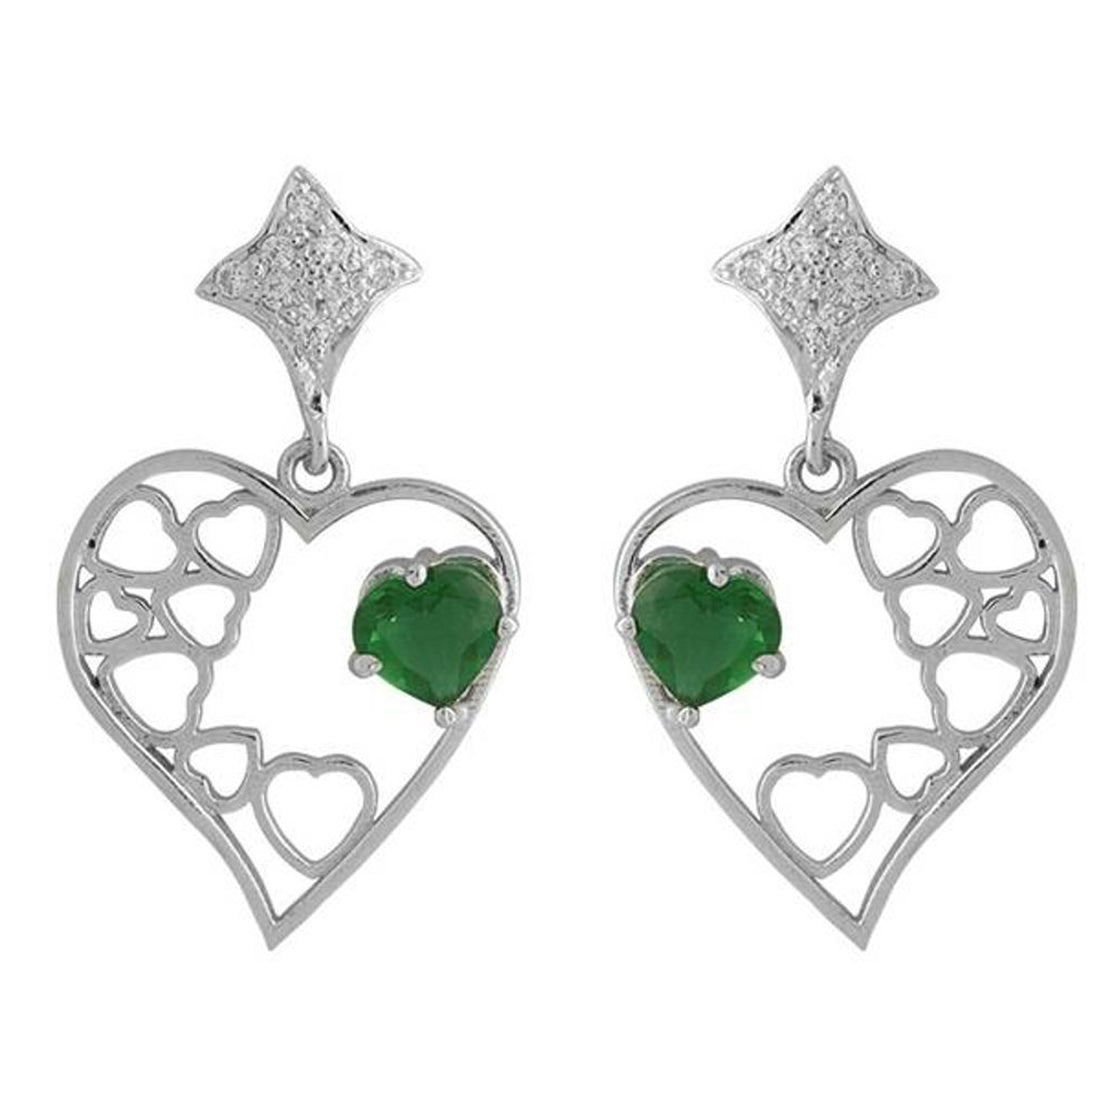 Green Stones Studded Sterling Silver Earrings